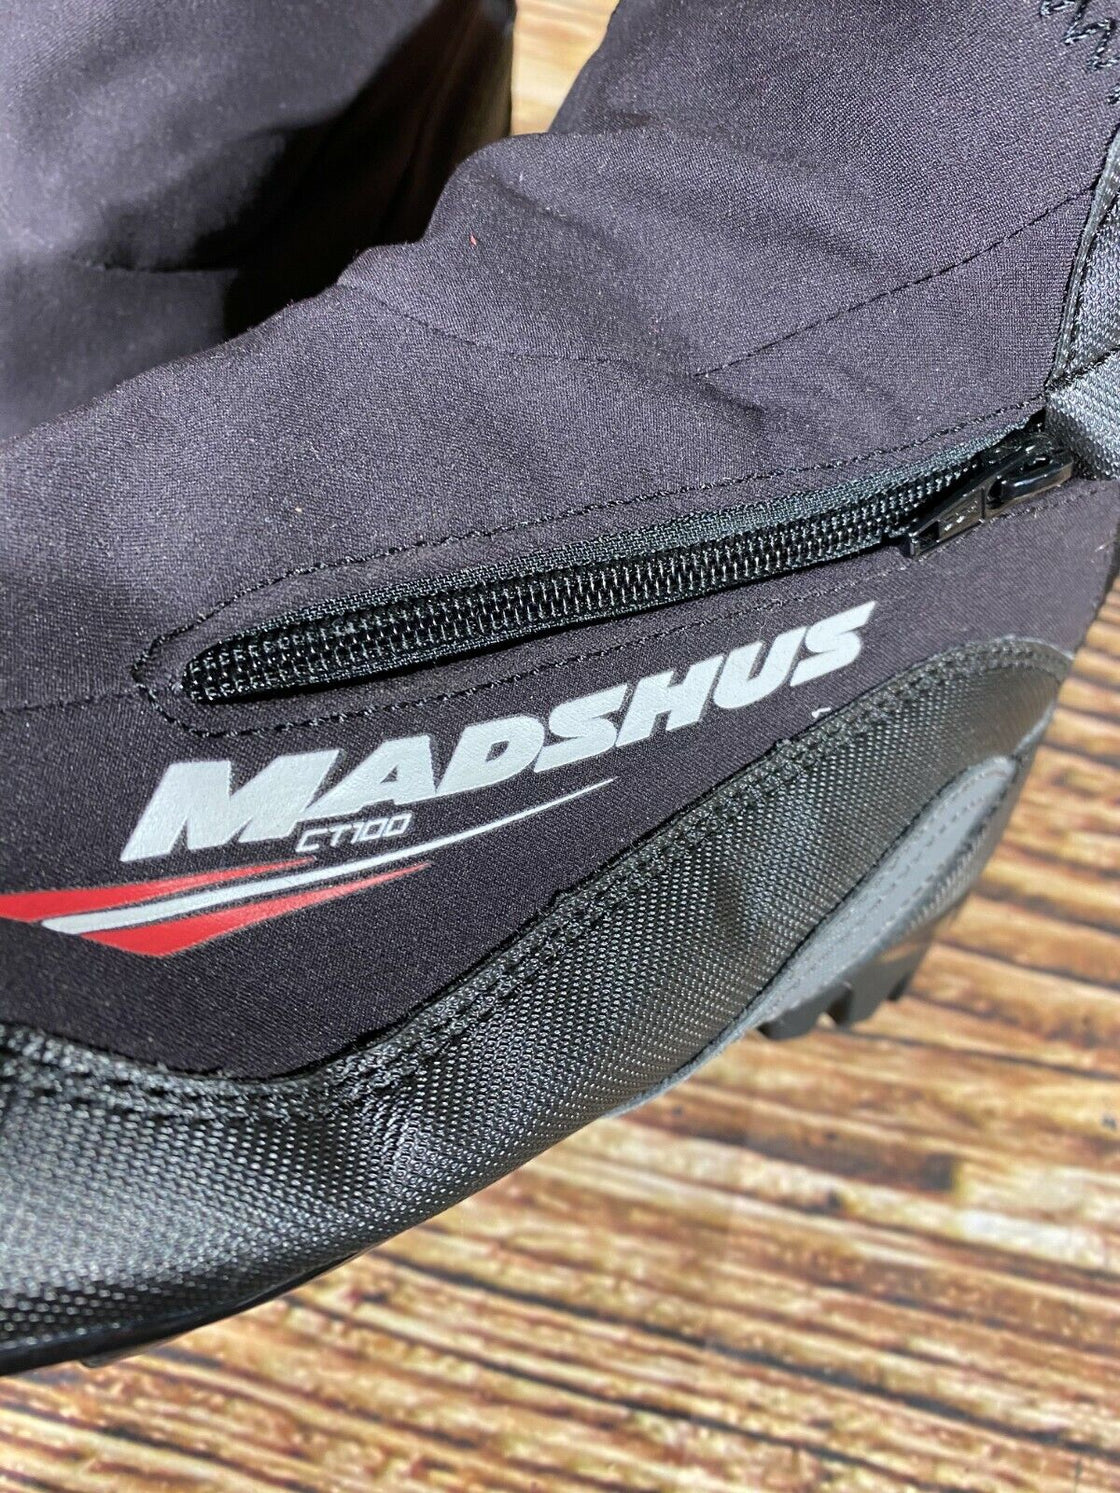 MADSHUS CT100 Touring Nordic Cross Country Ski Boots Size EU38 US5.5 NNN